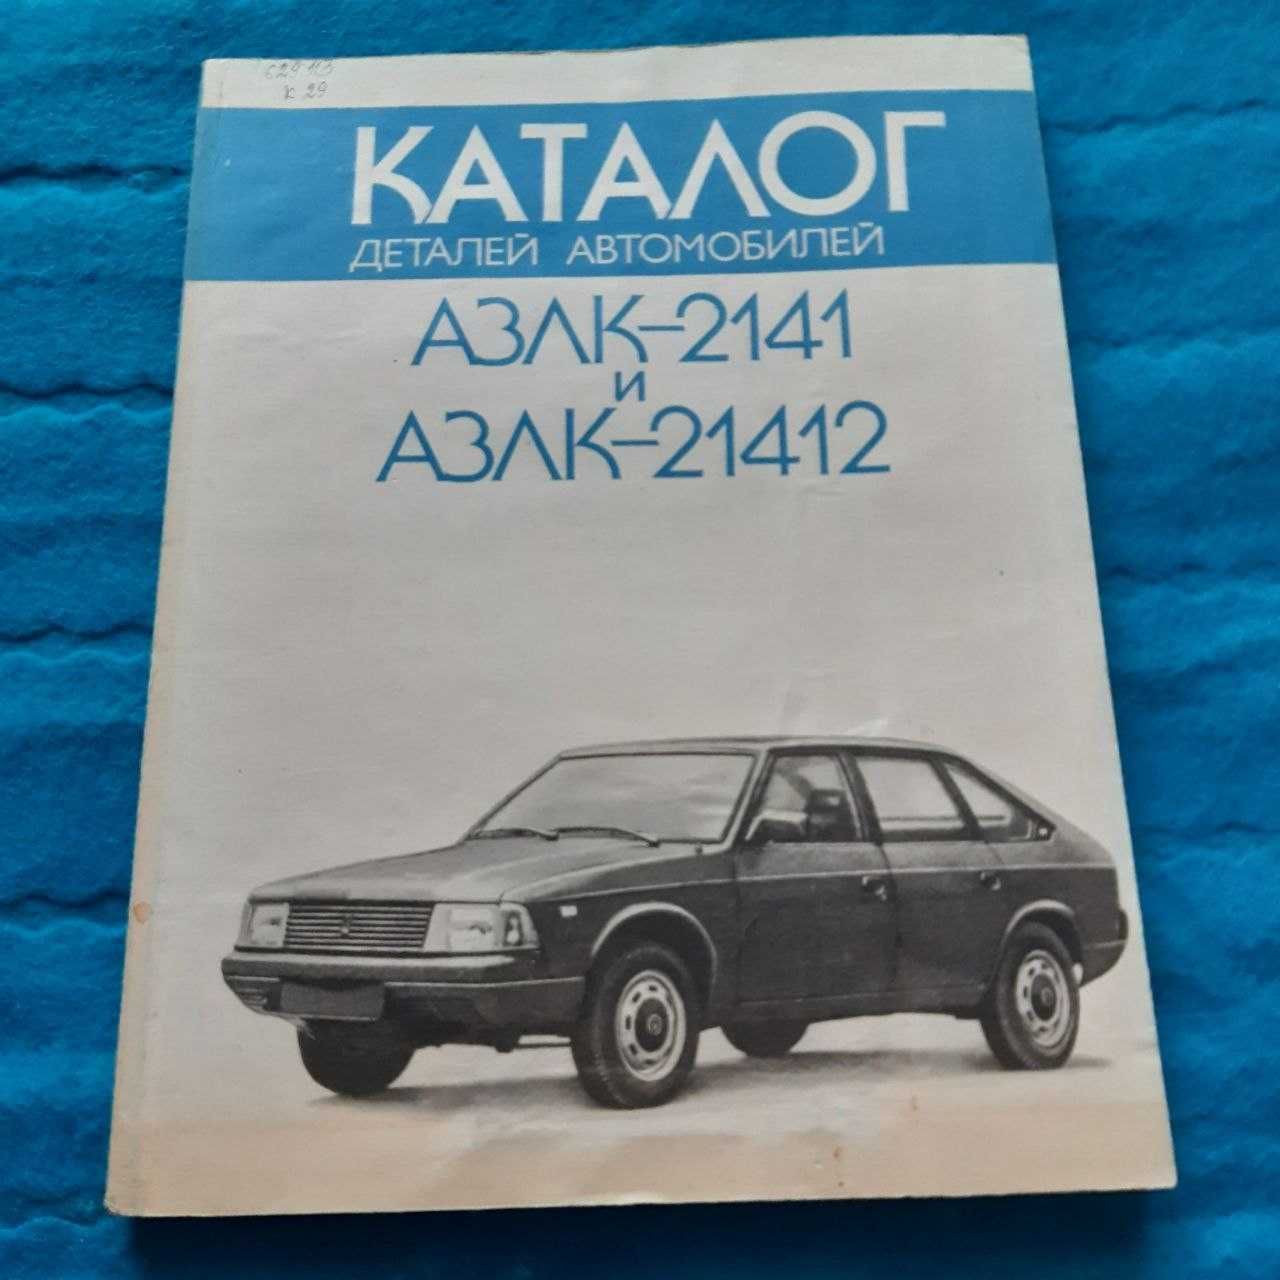 Ретро авто книга "Каталог деталей автомобиля АЗЛК-2141"